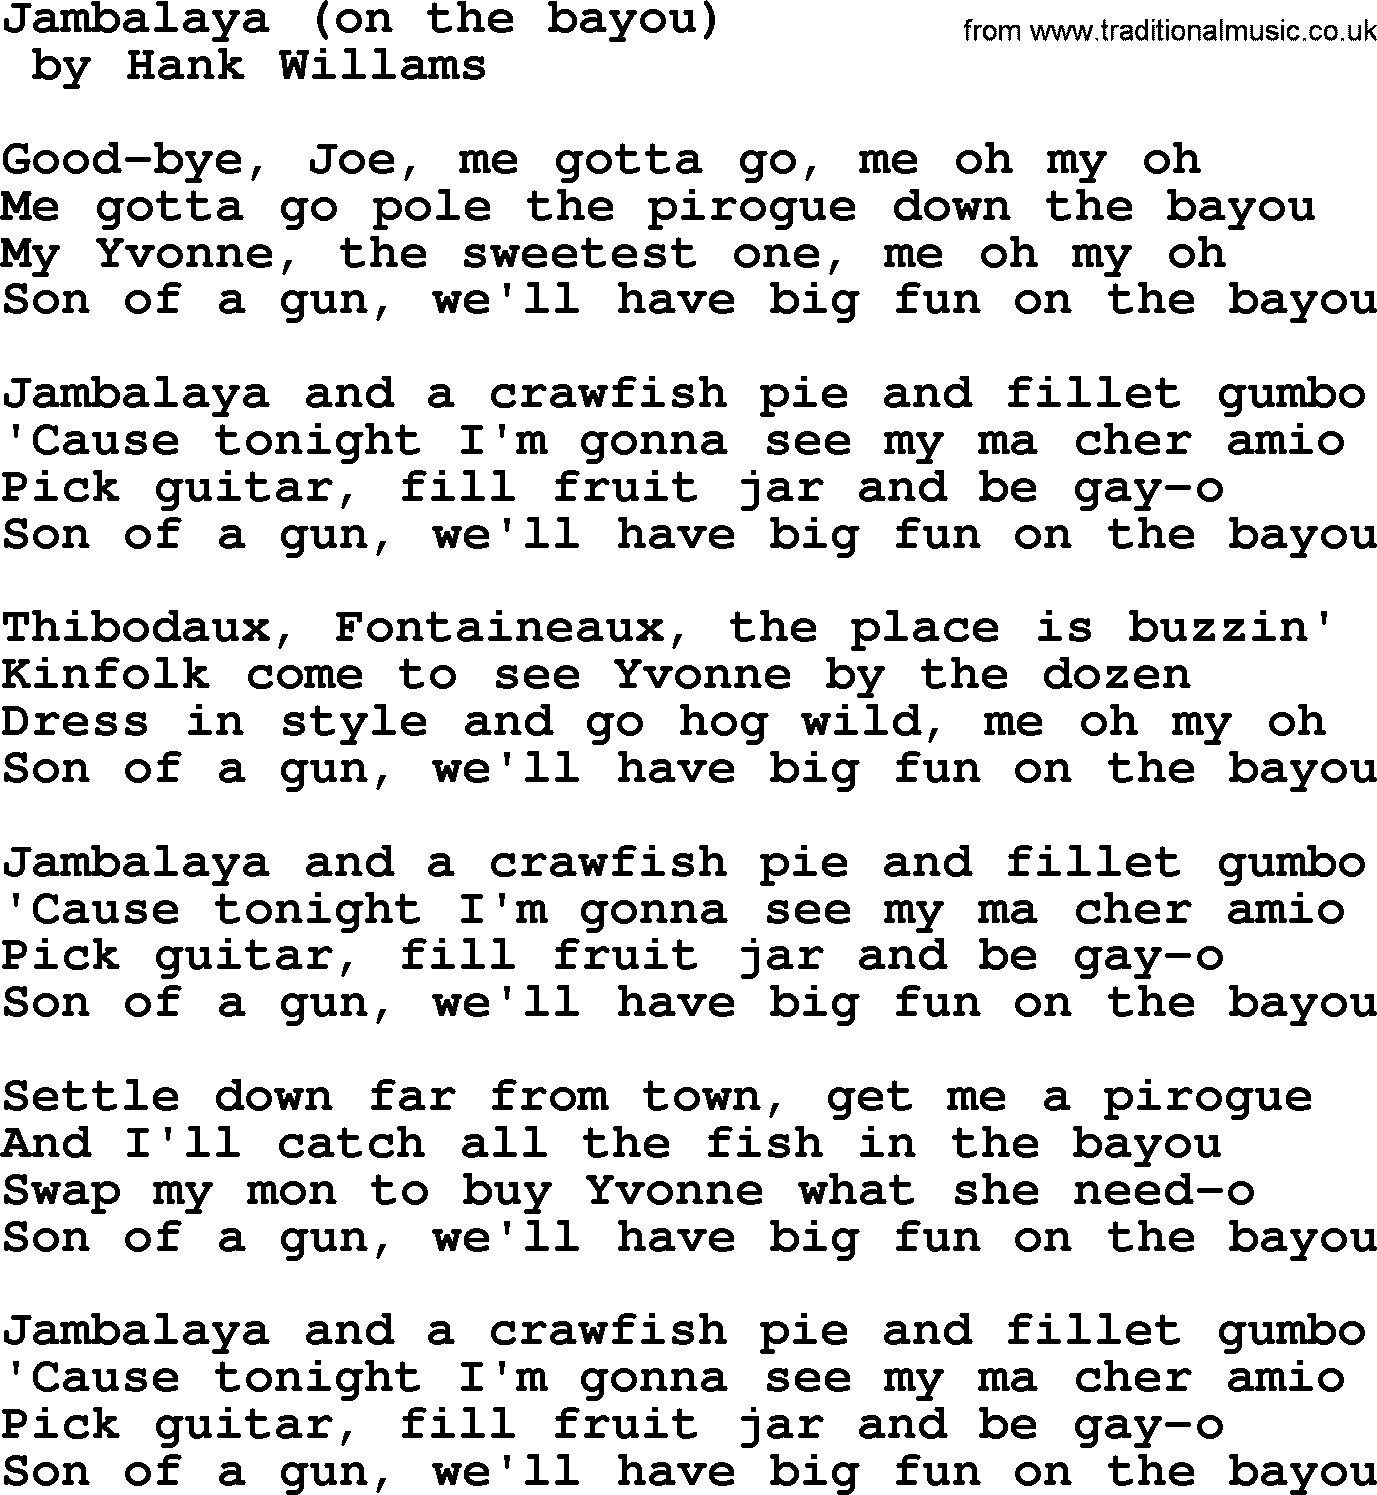 Bruce Springsteen song: Jambalaya(On The Bayou) lyrics